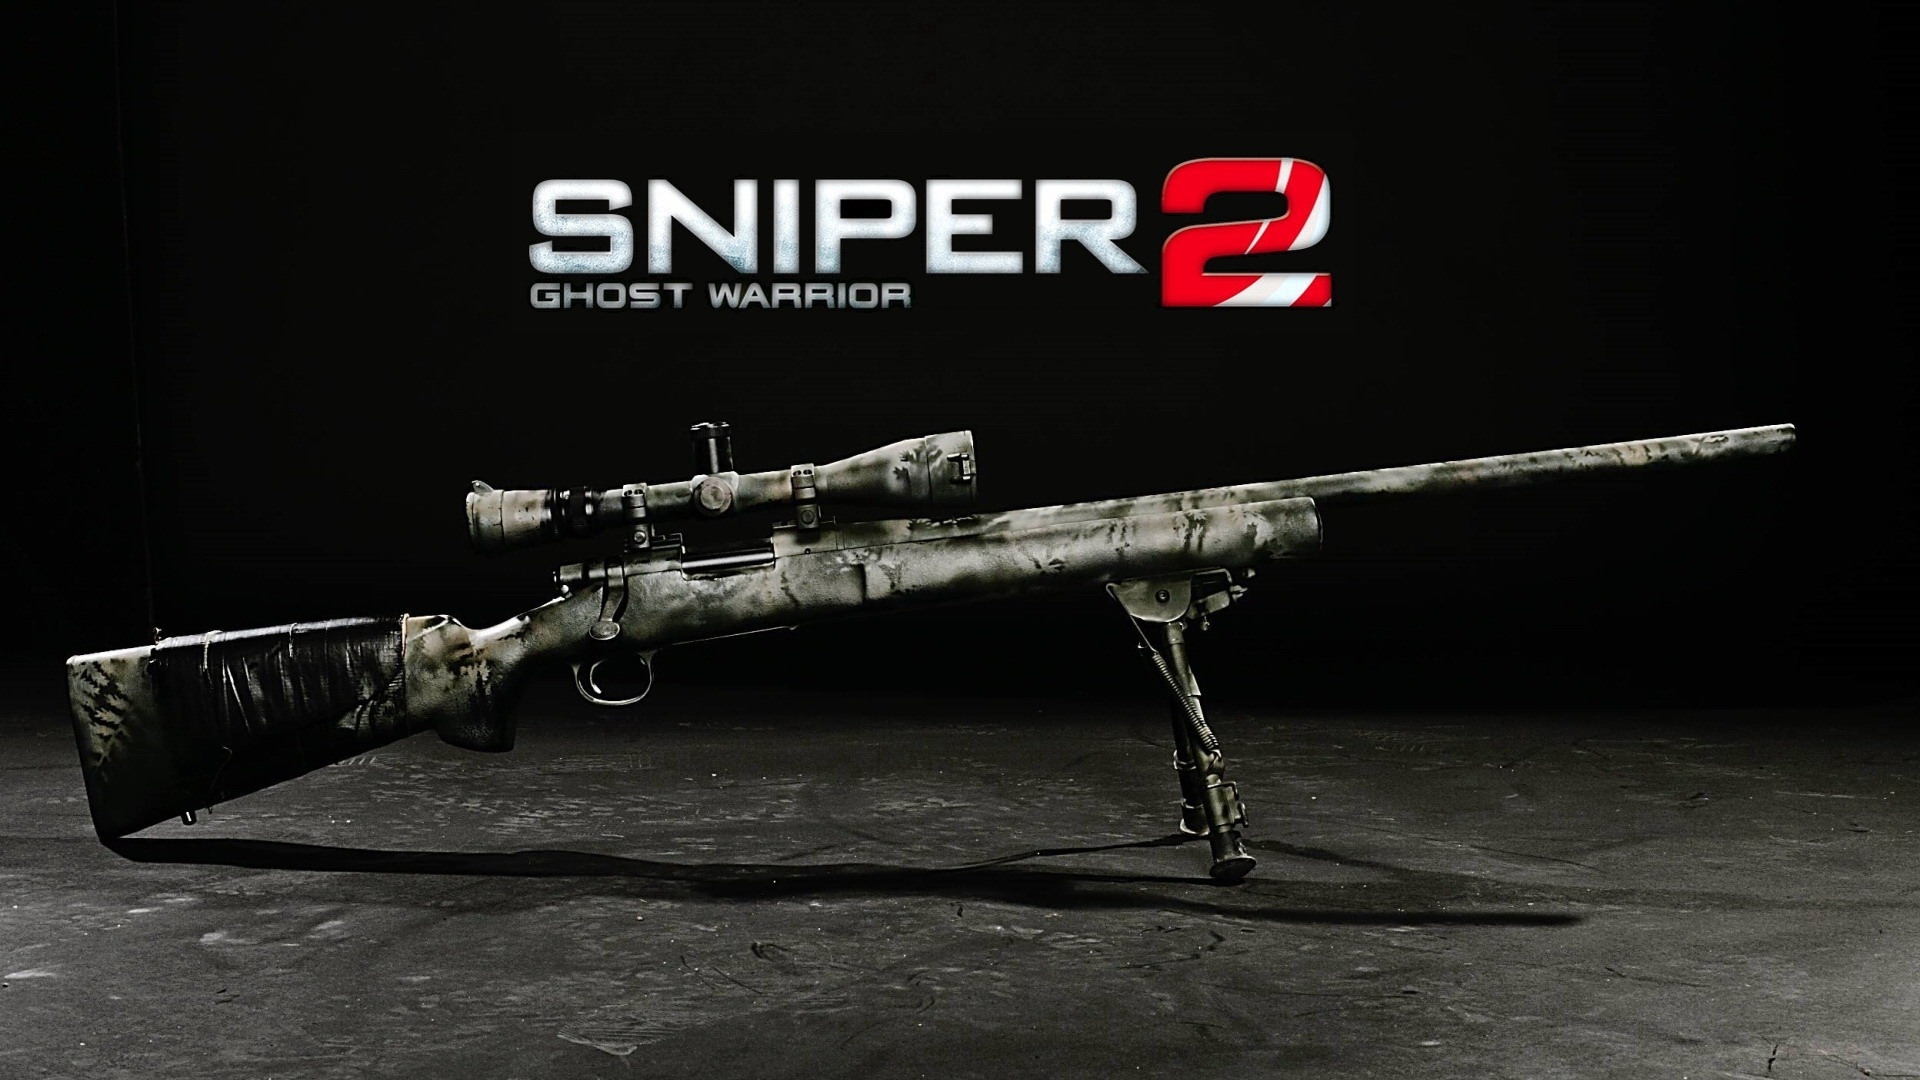 Sniper-Ghost_Warrior_2_Game_HD_Wallpaper_05_1920x1080